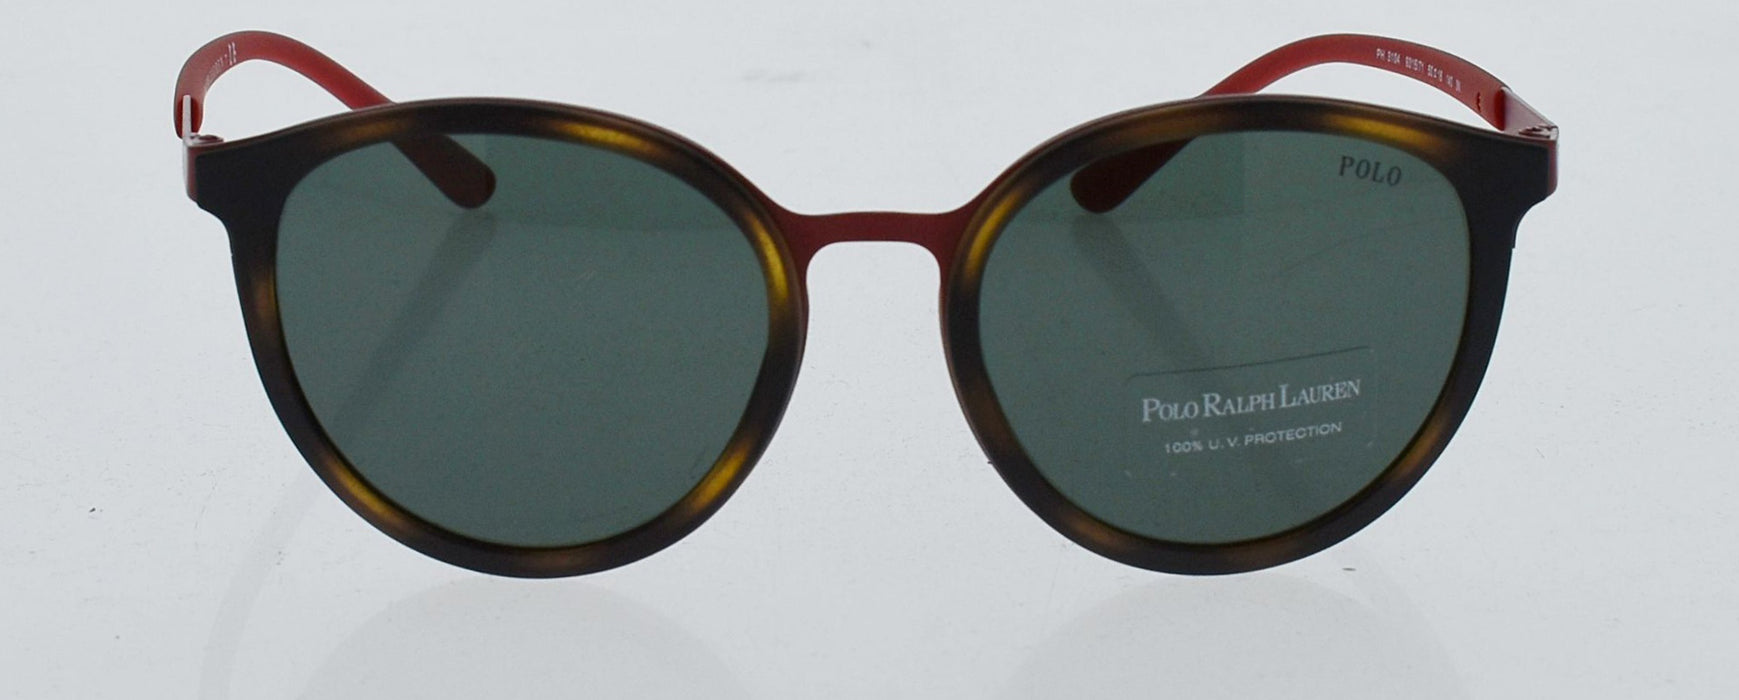 Polo Ralph Lauren PH 3104 9315-71 - Semishiny Red-Green by Ralph Lauren for Men - 50-18-140 mm Sunglasses